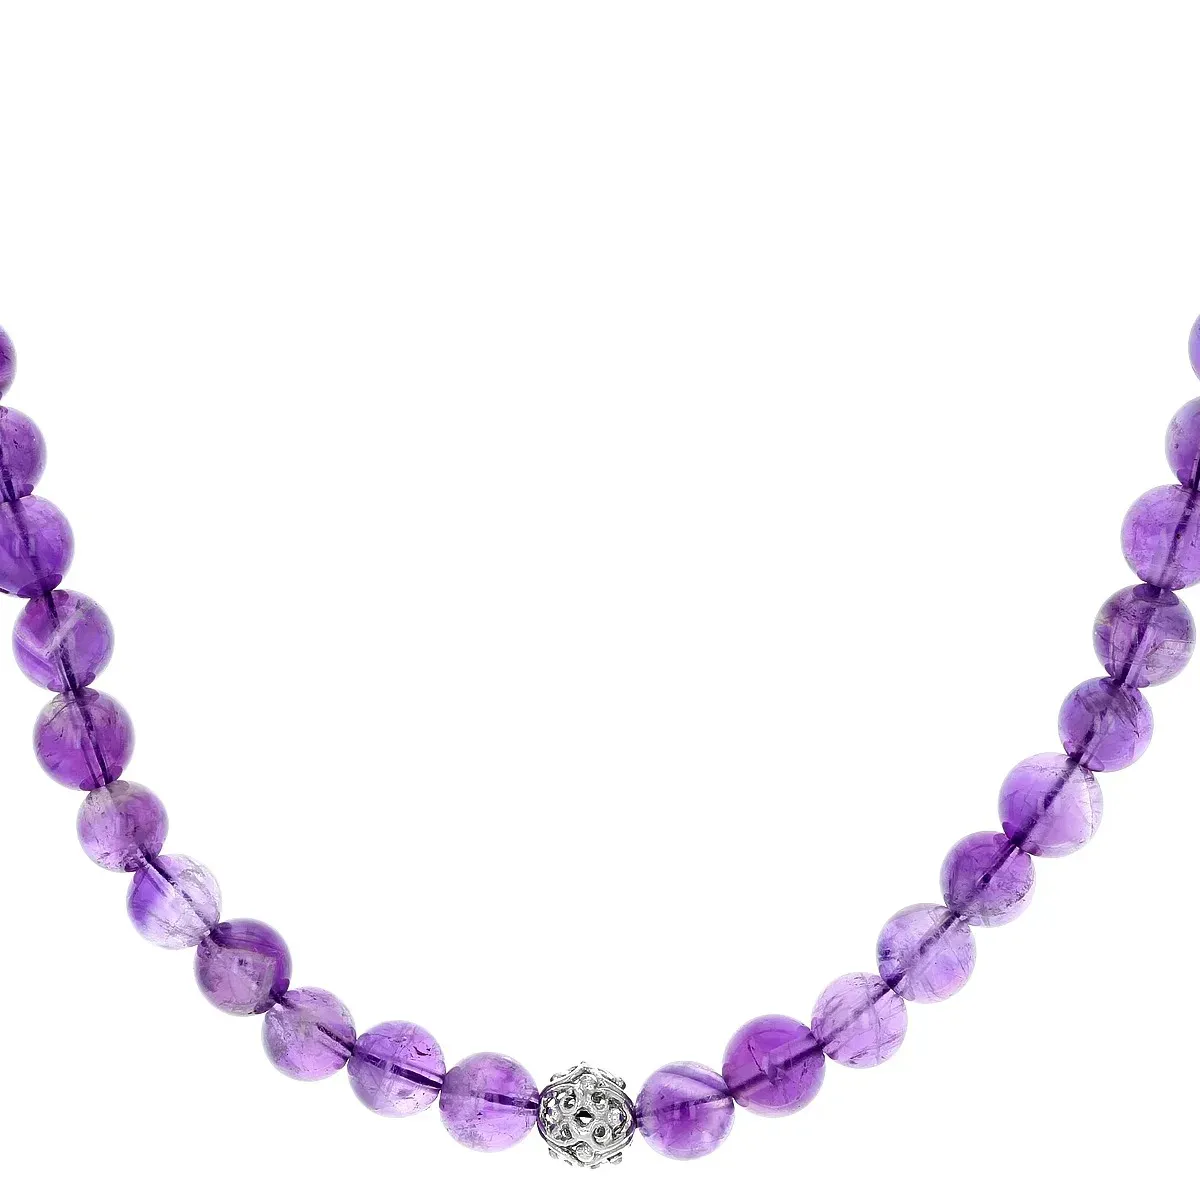 Kalung Bolo perak murni Rhodium kecubung ungu: perhiasan wanita modis, pengerjaan halus, aksen batu permata elegan